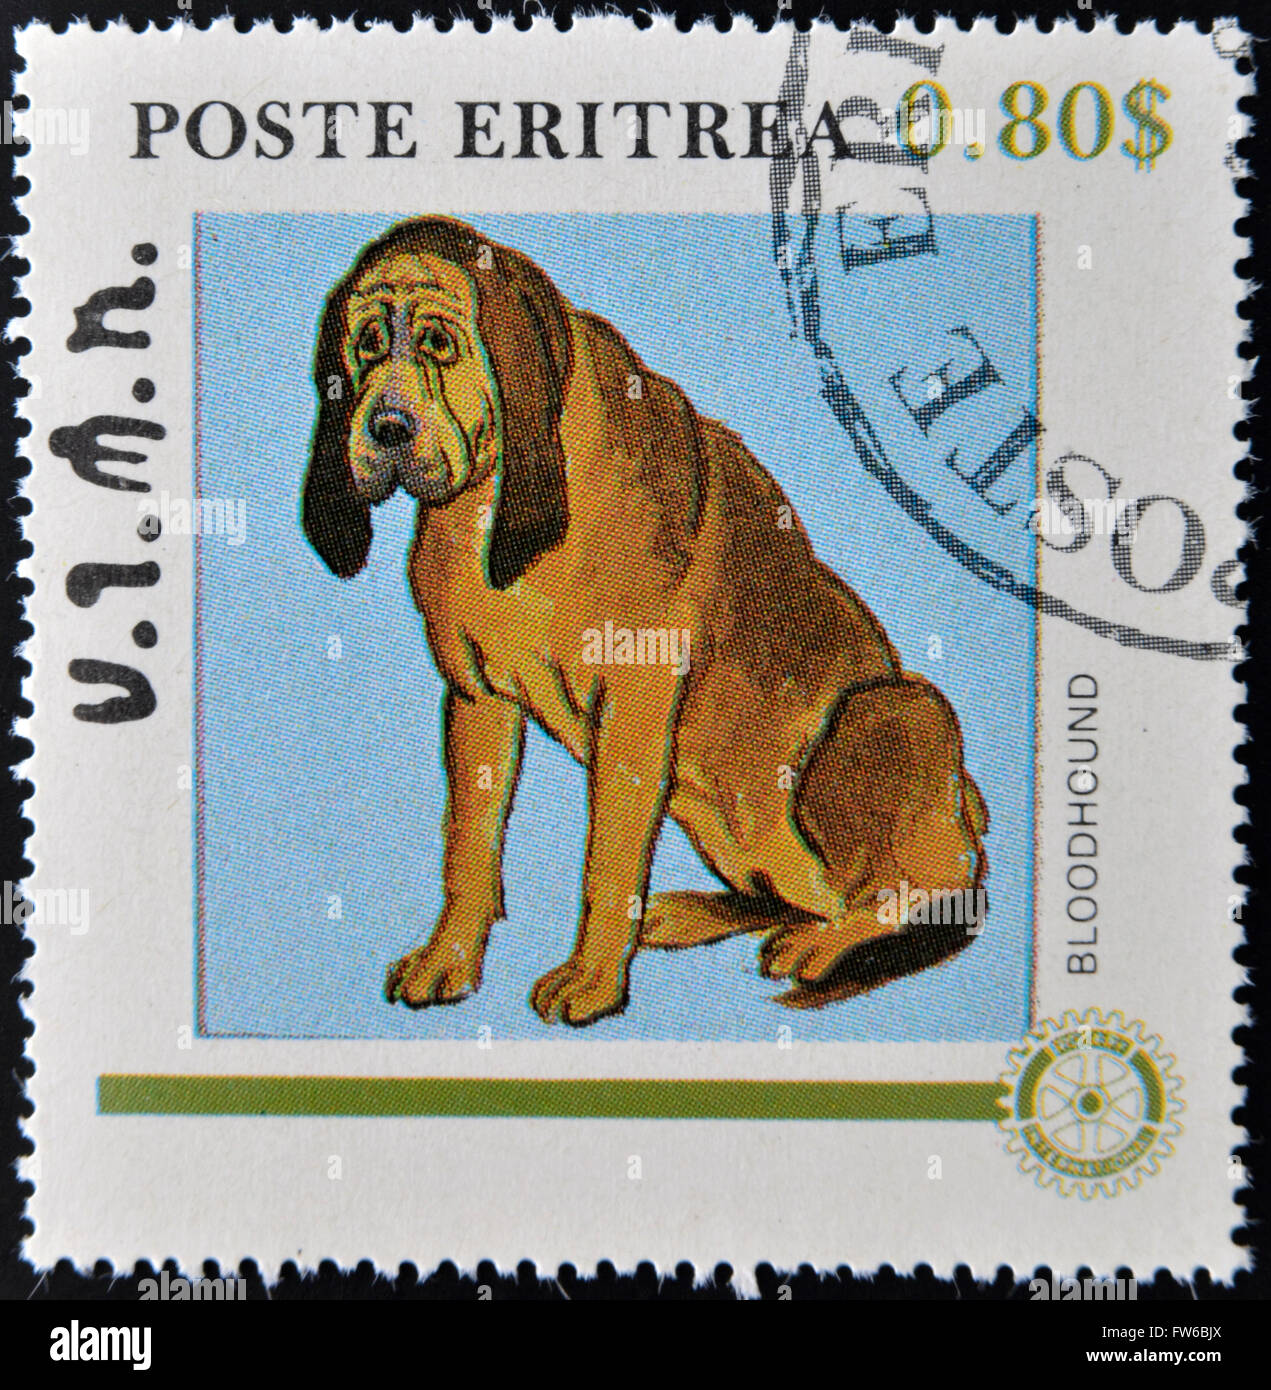 ERITREA - CIRCA 1984: A stamp printed in Eritrea shows a dog, bloodhound, circa 1984 Stock Photo